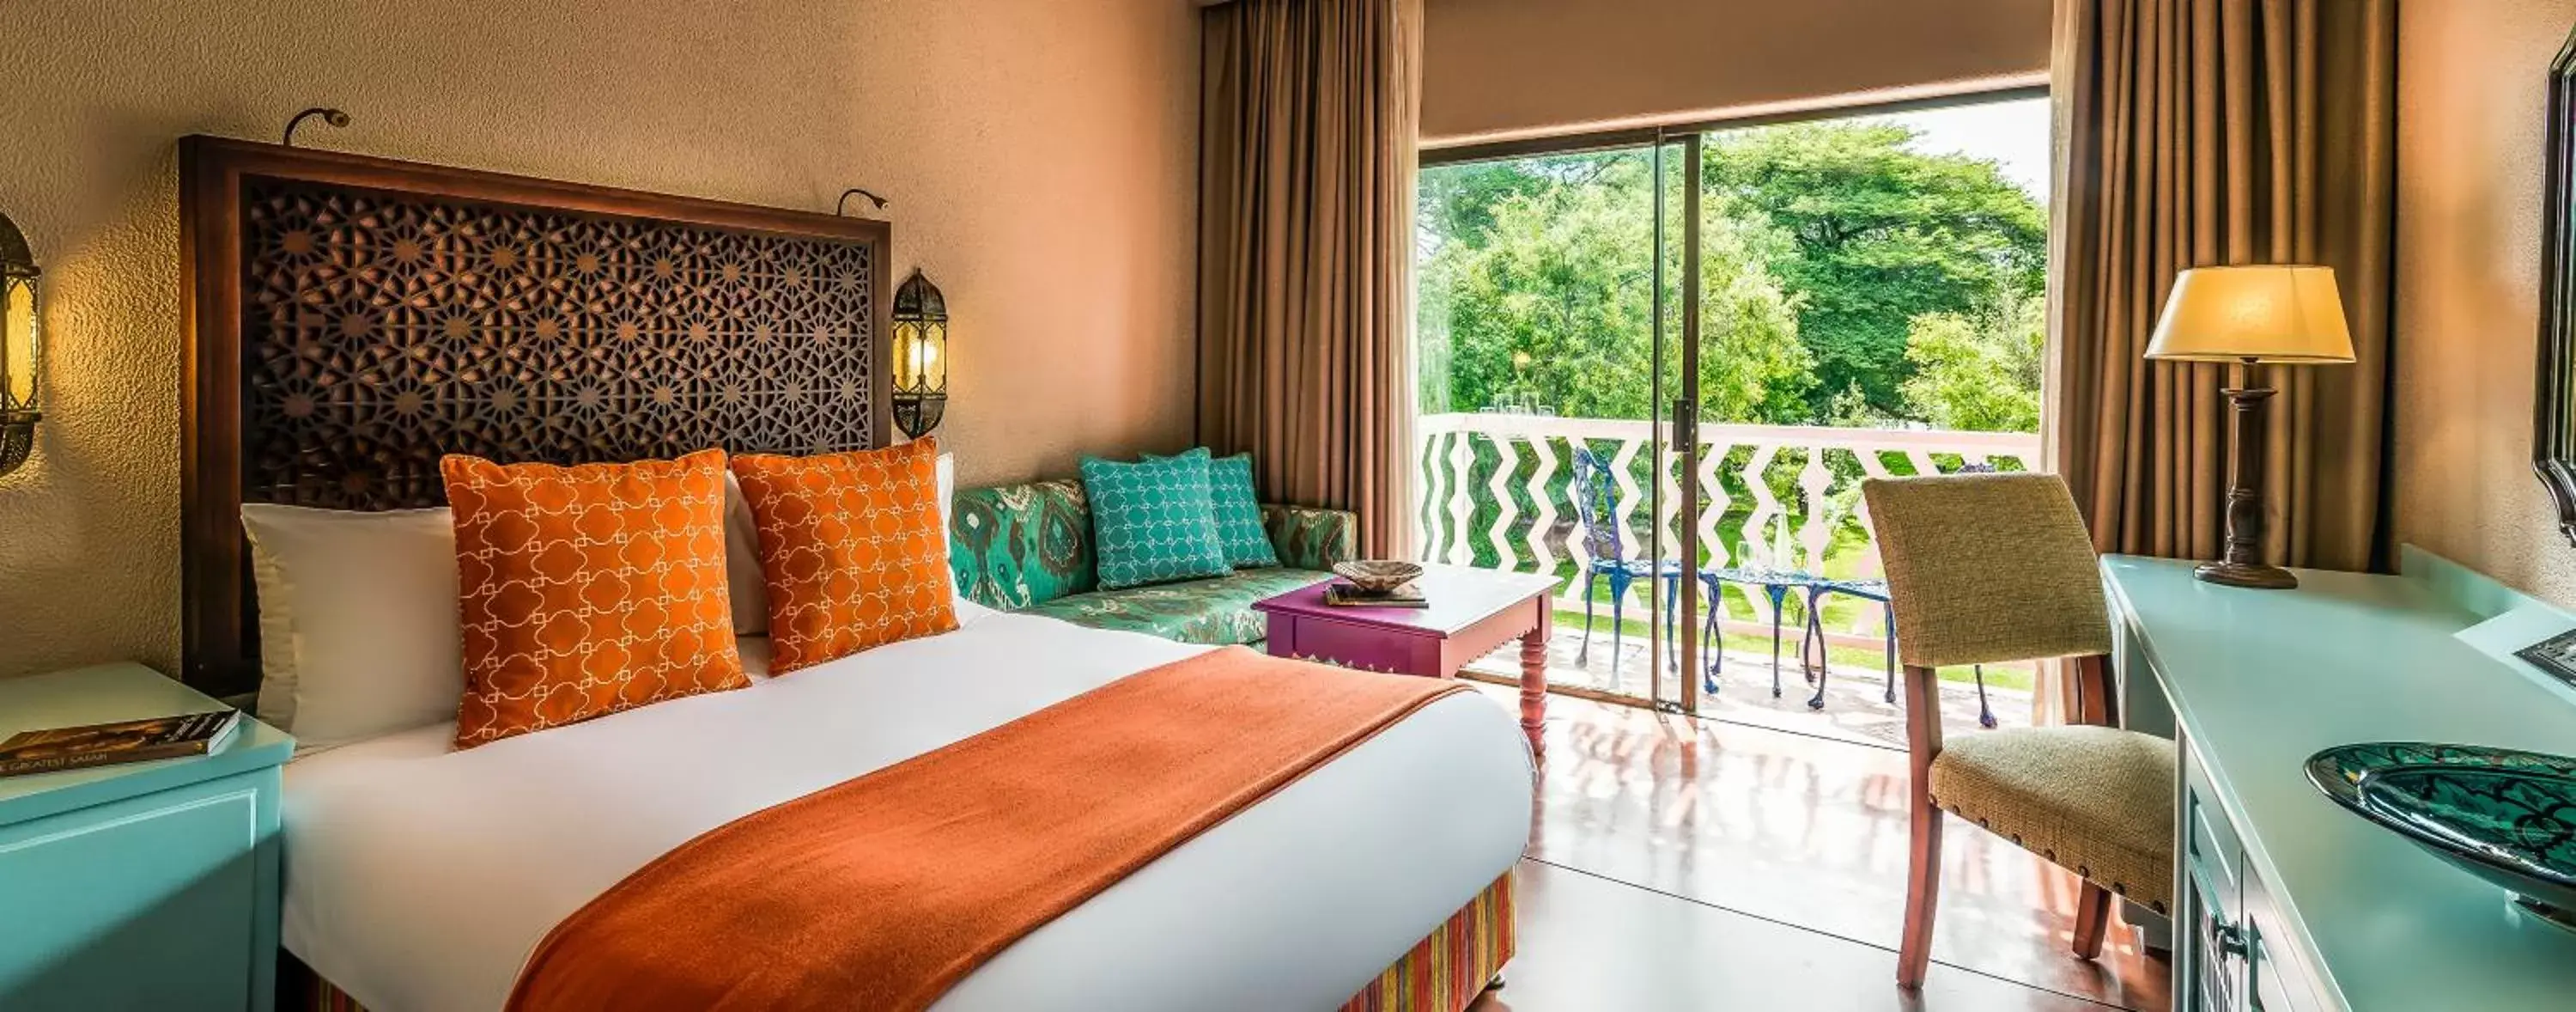 Bedroom, Room Photo in Avani Victoria Falls Resort